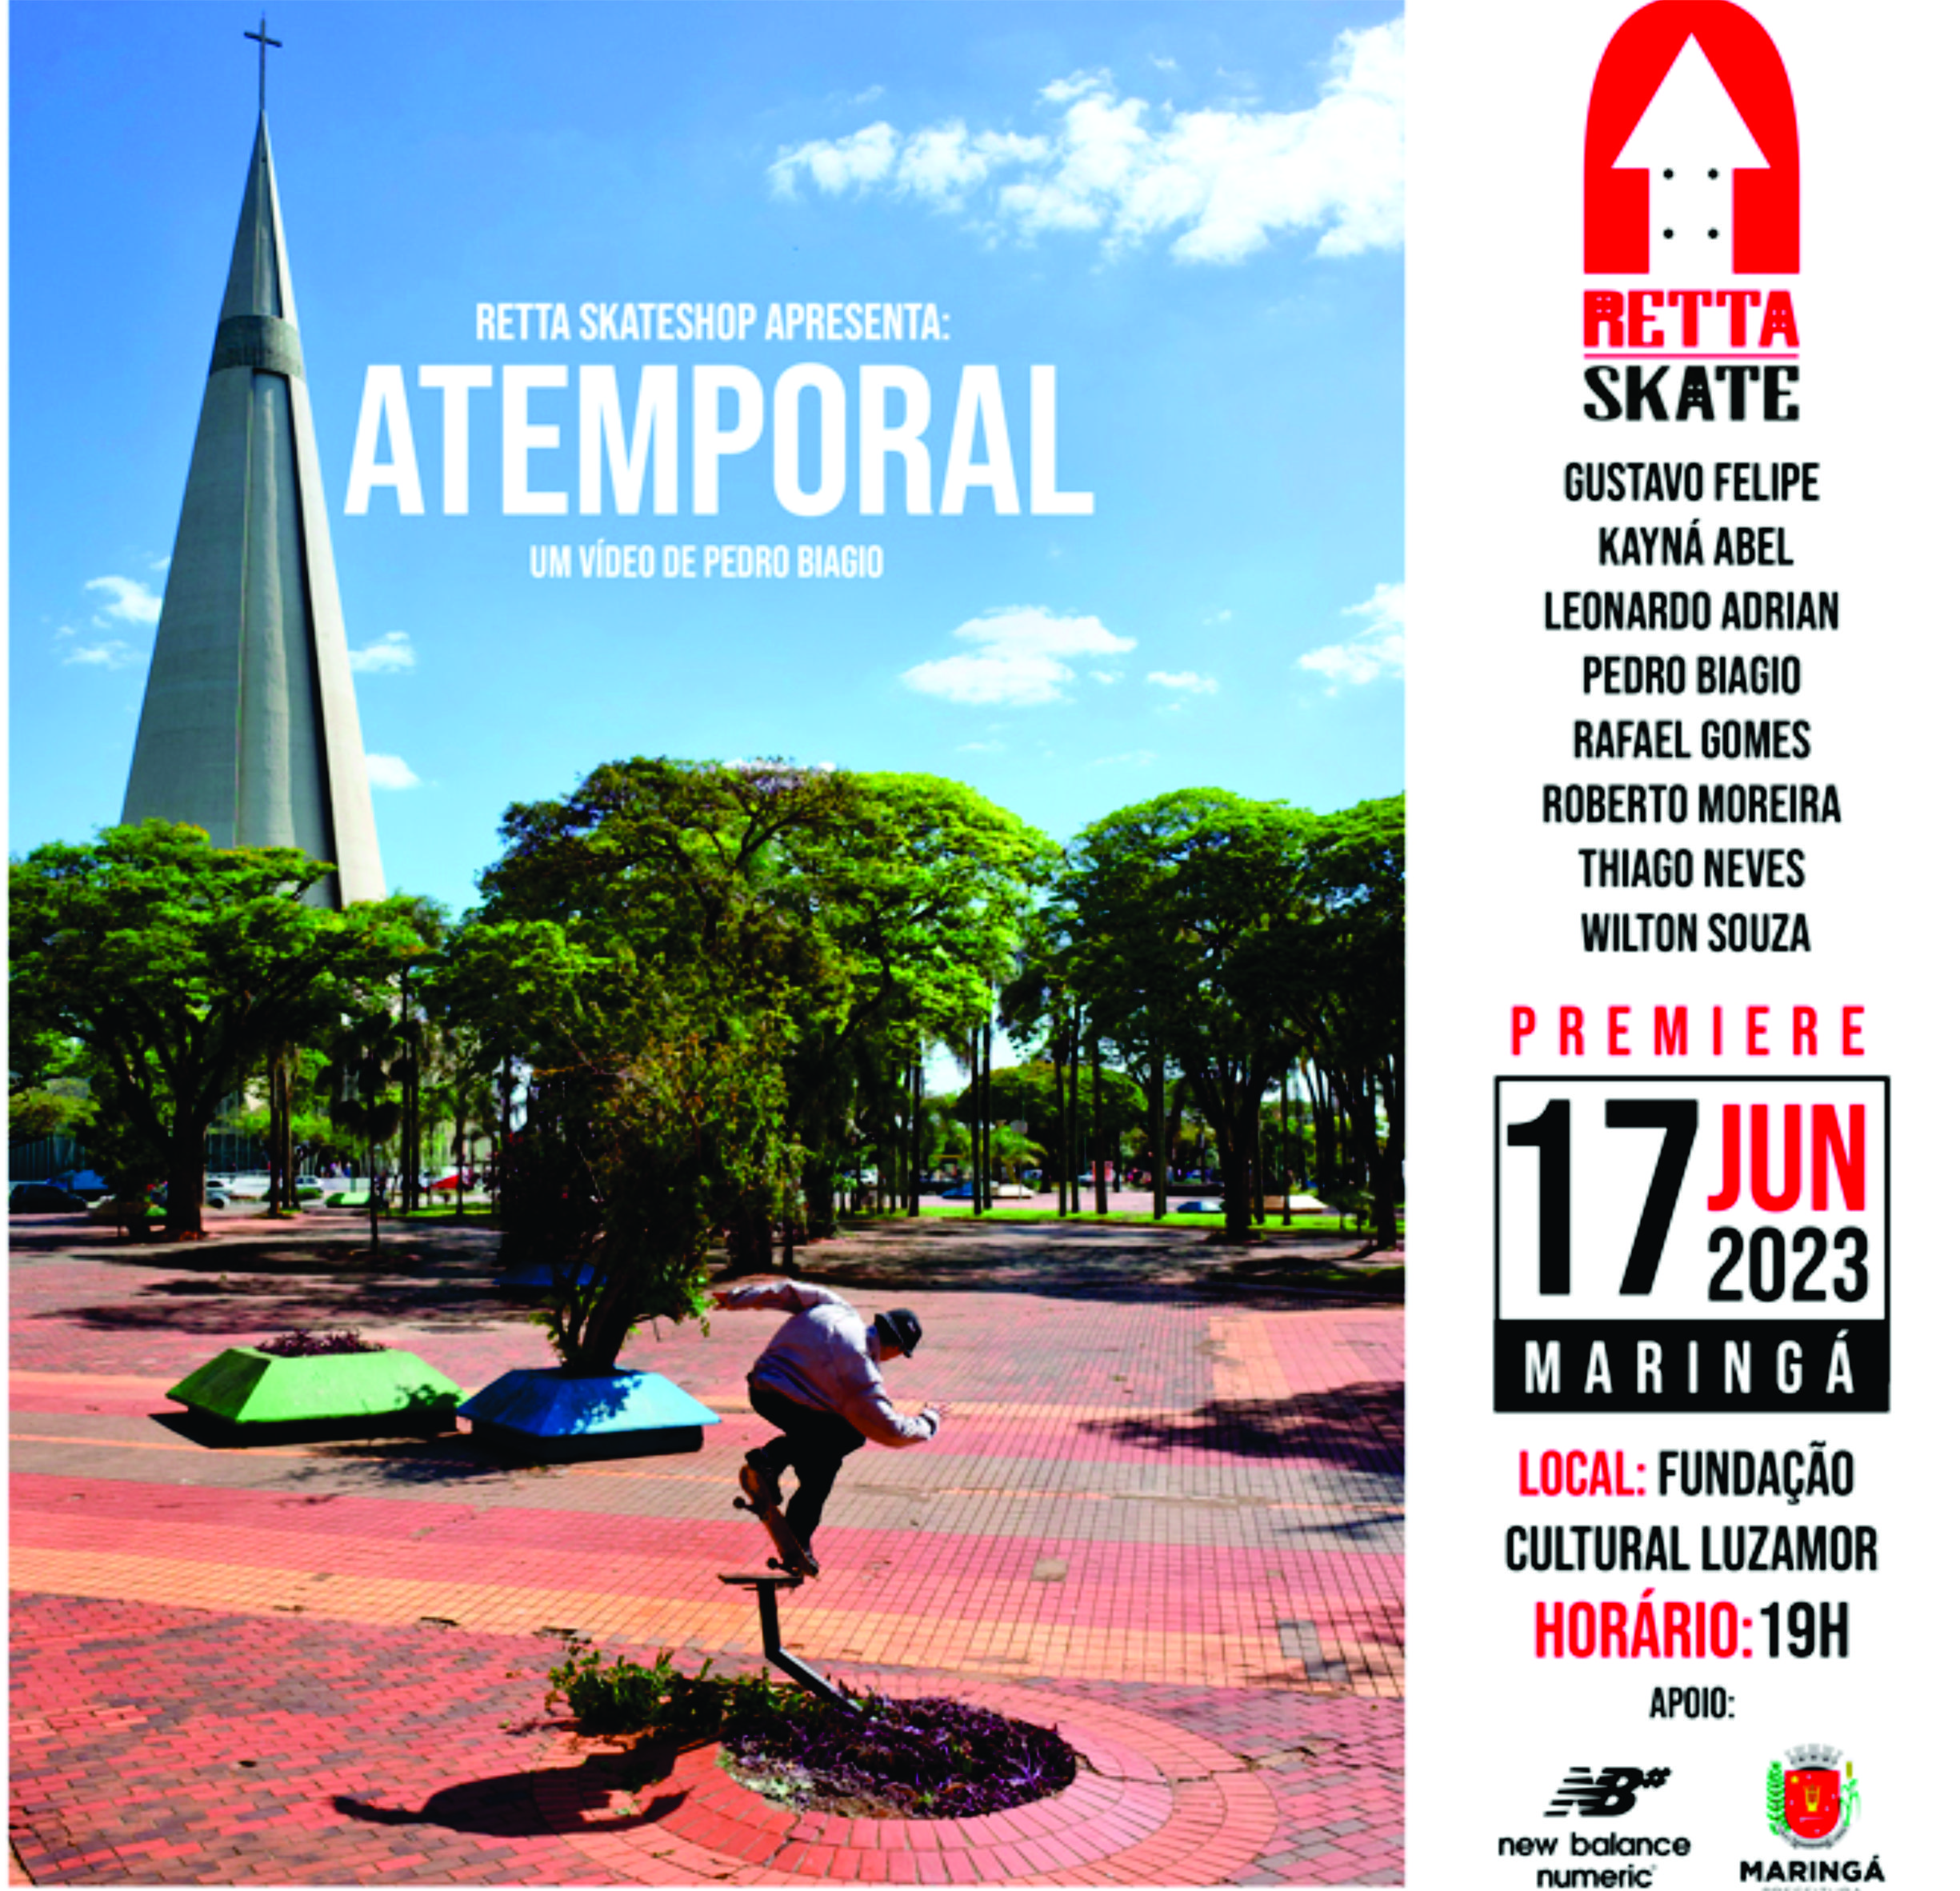 Retta Skateshop - Atemporal cover art